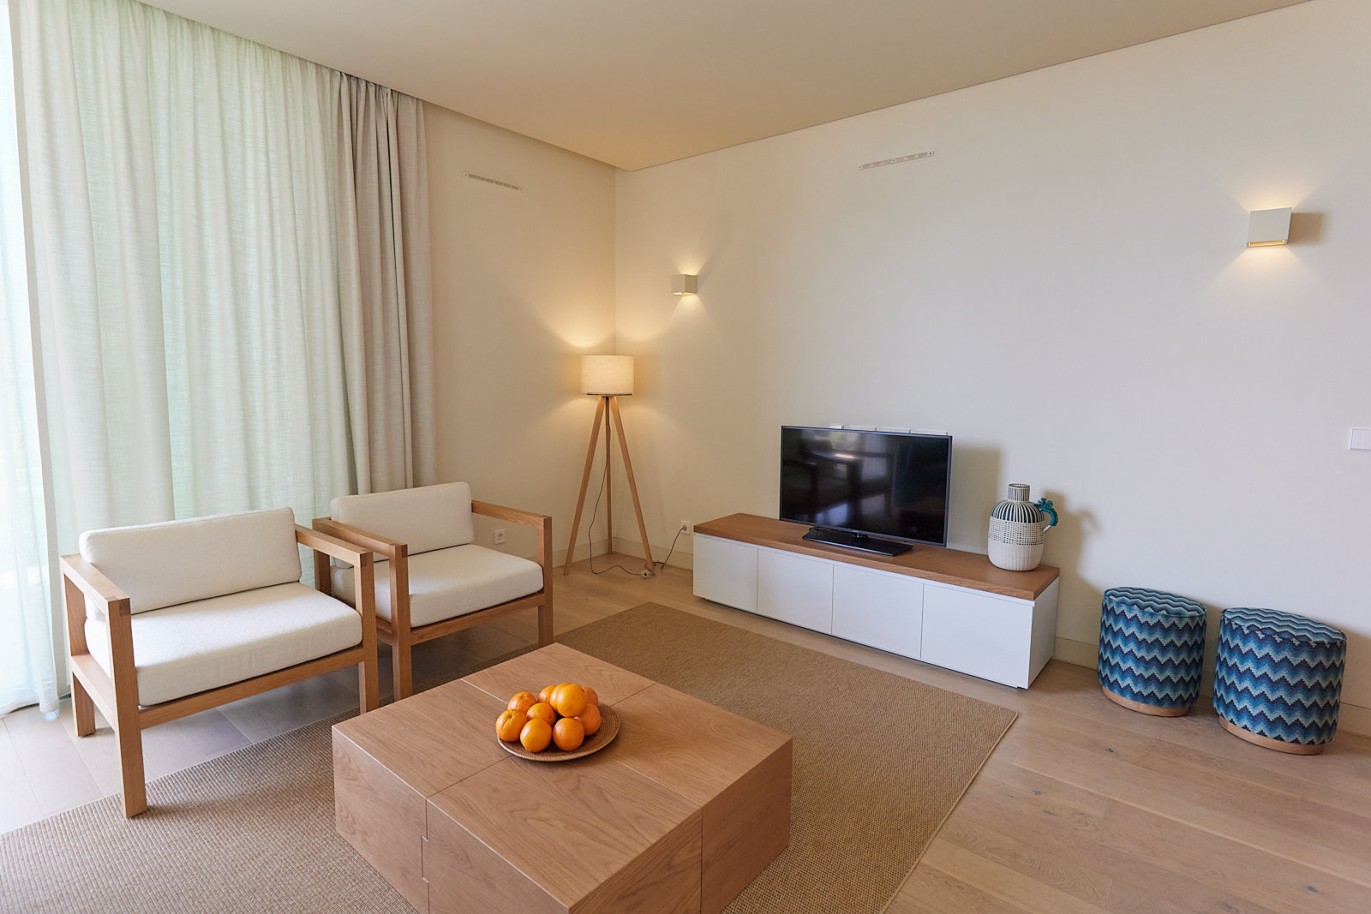 2 bedroom apartment in resort, for sale in Porches, Algarve_230552